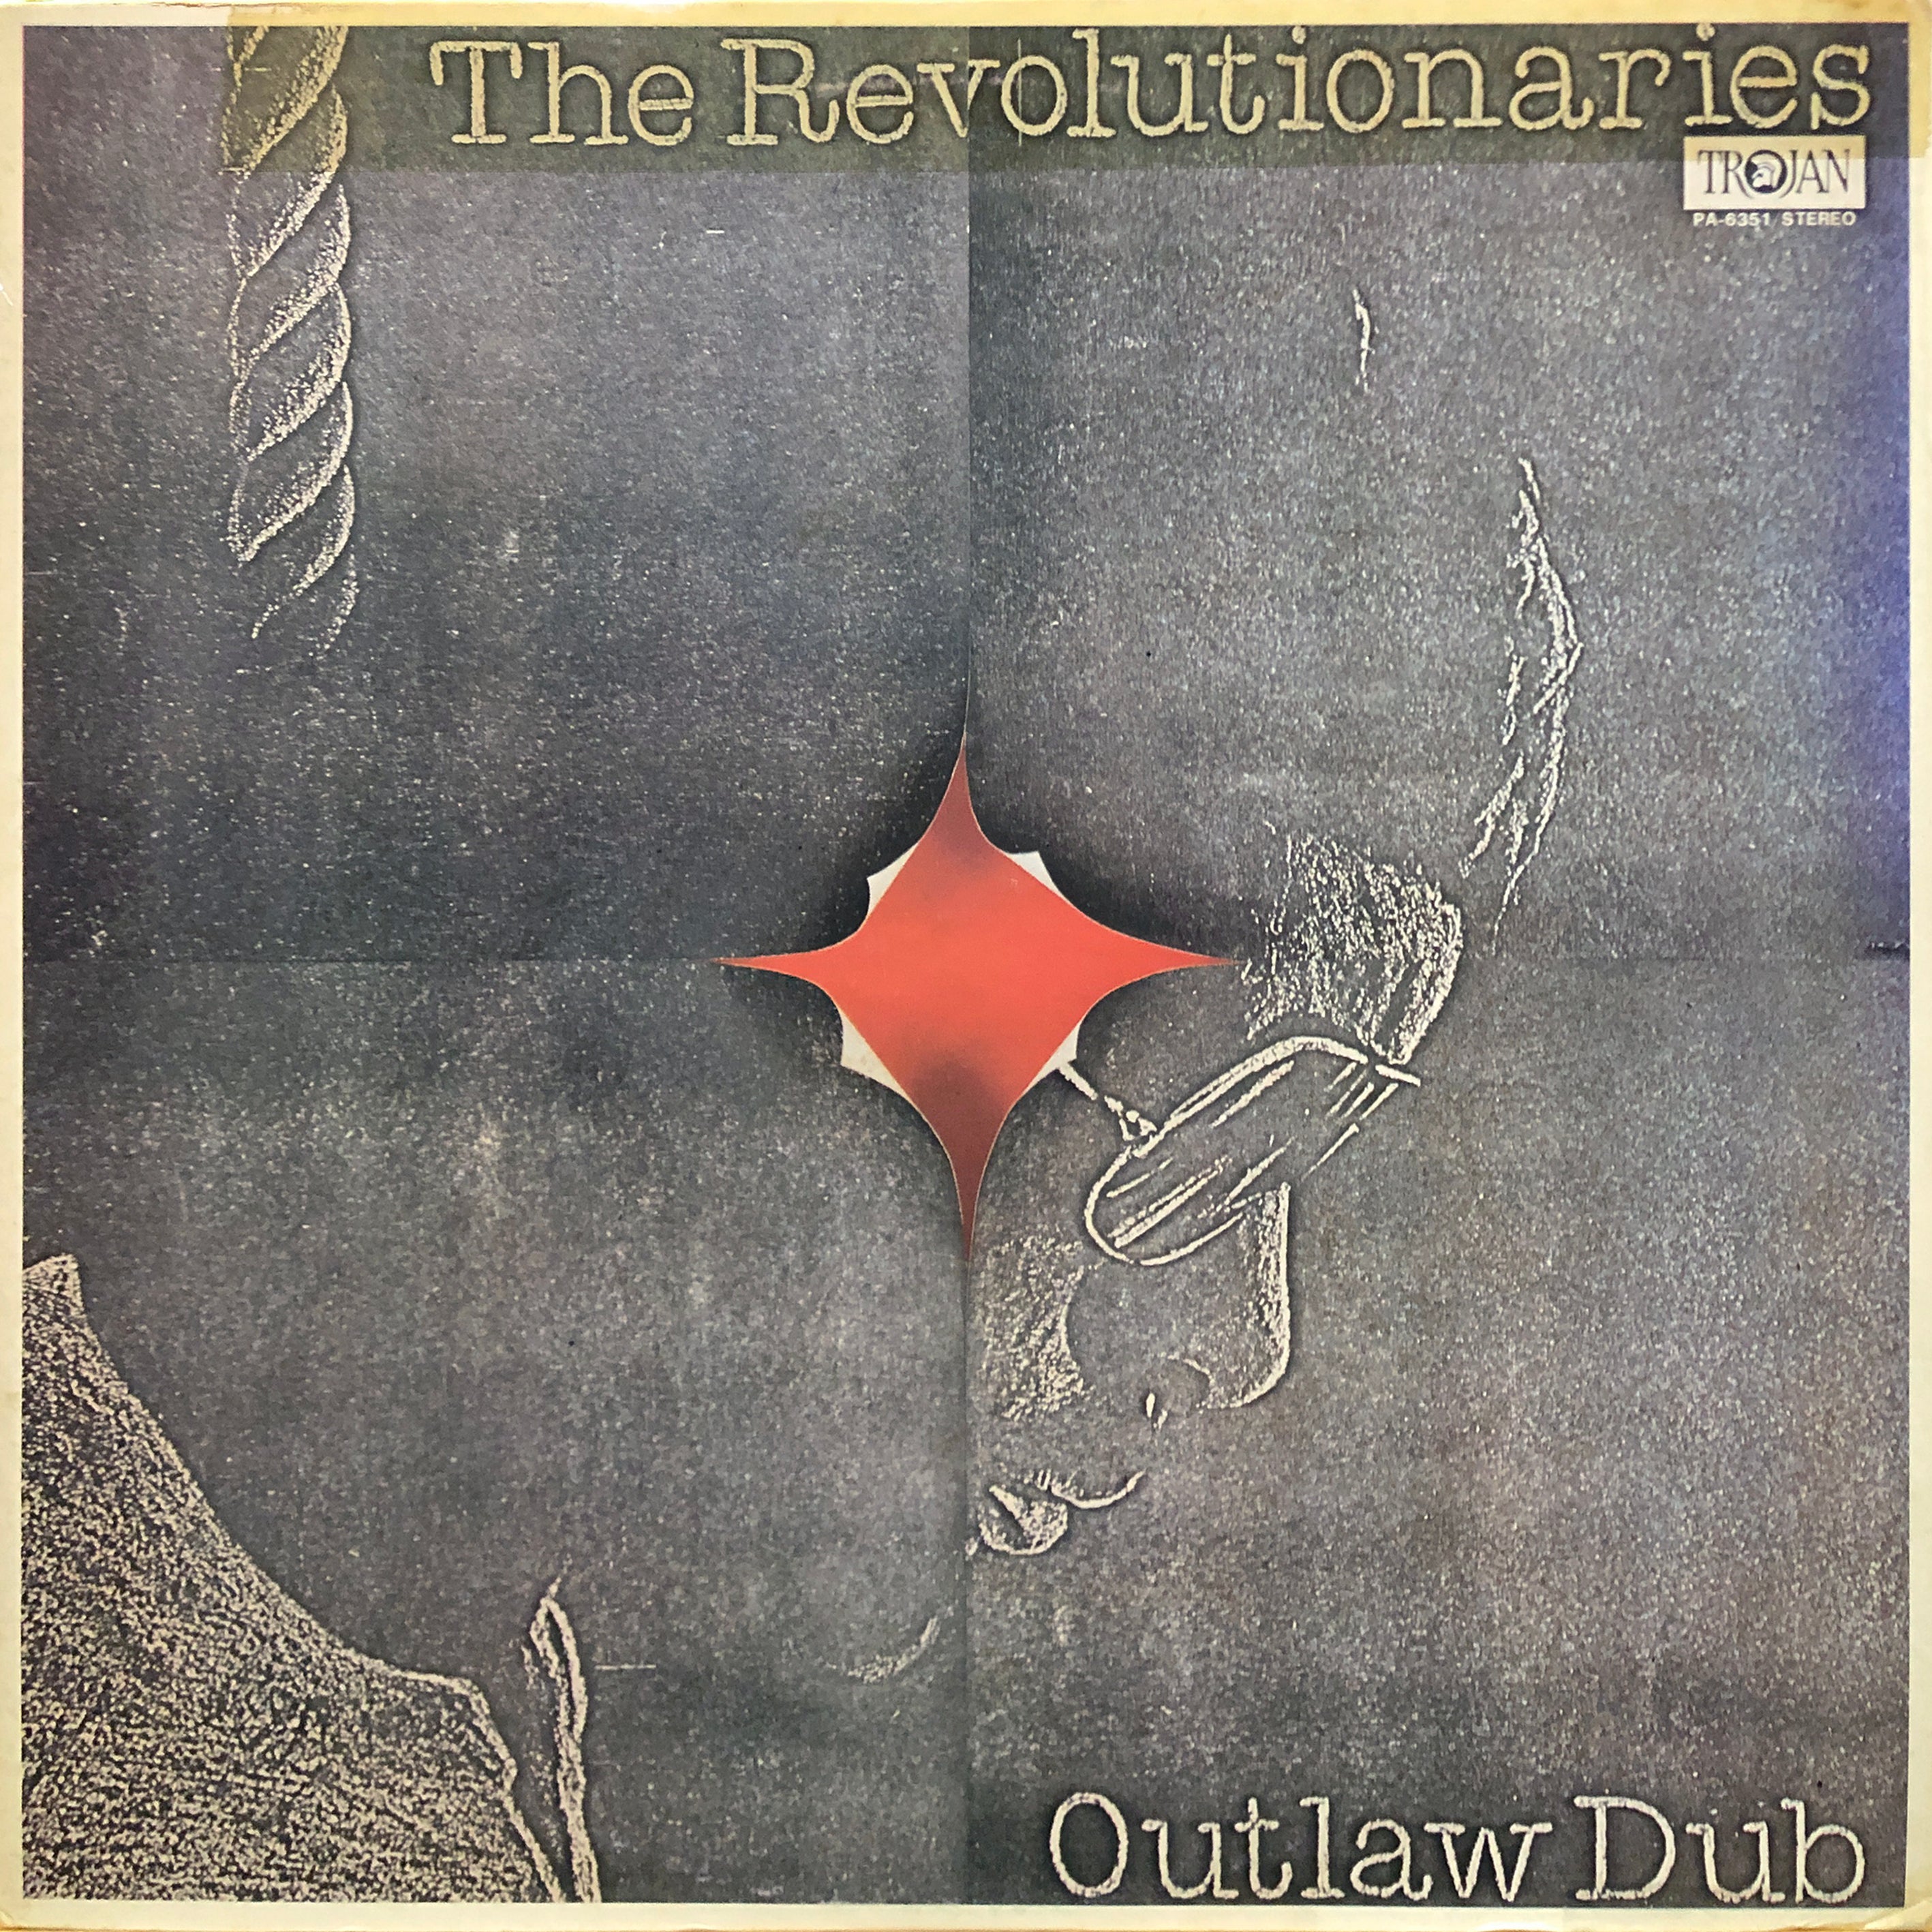 LP The Revolutionaries ダブ 名盤 - 洋楽